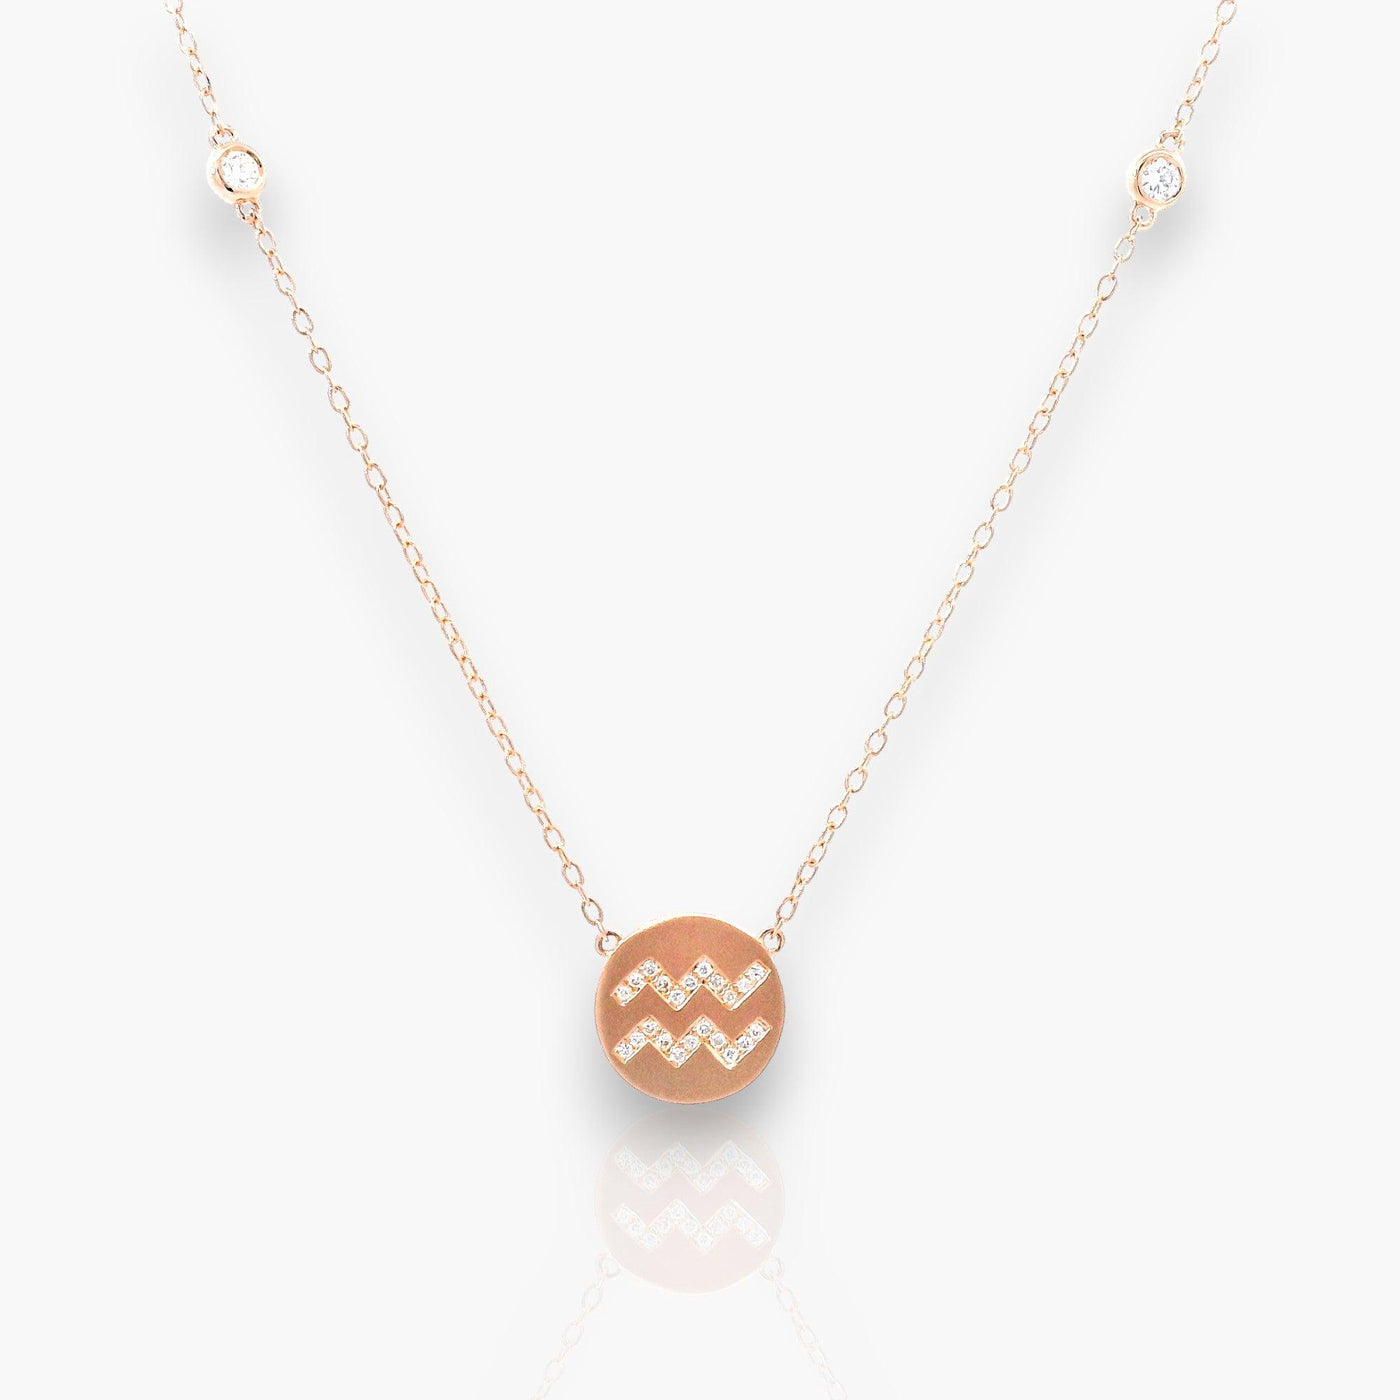 Zodiac Necklace with Diamonds & 18K Rose Gold - Moregola Fine Jewelry